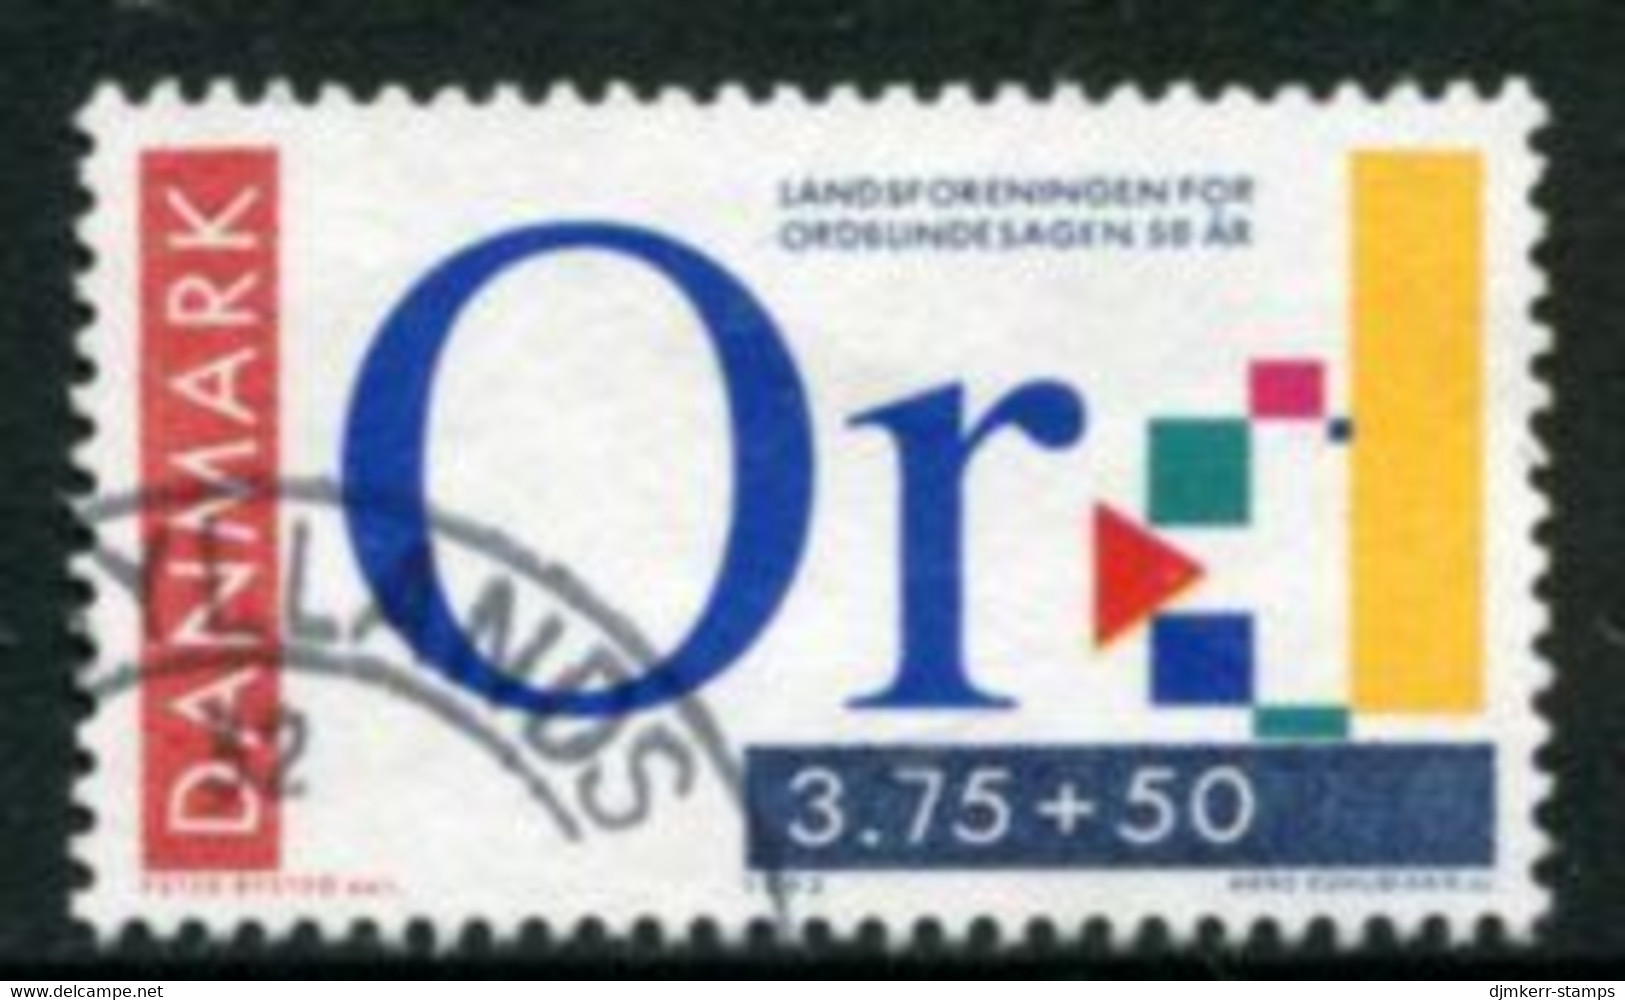 DENMARK 1992 Dyslexia Associationt Used   Michel 1037 - Gebraucht